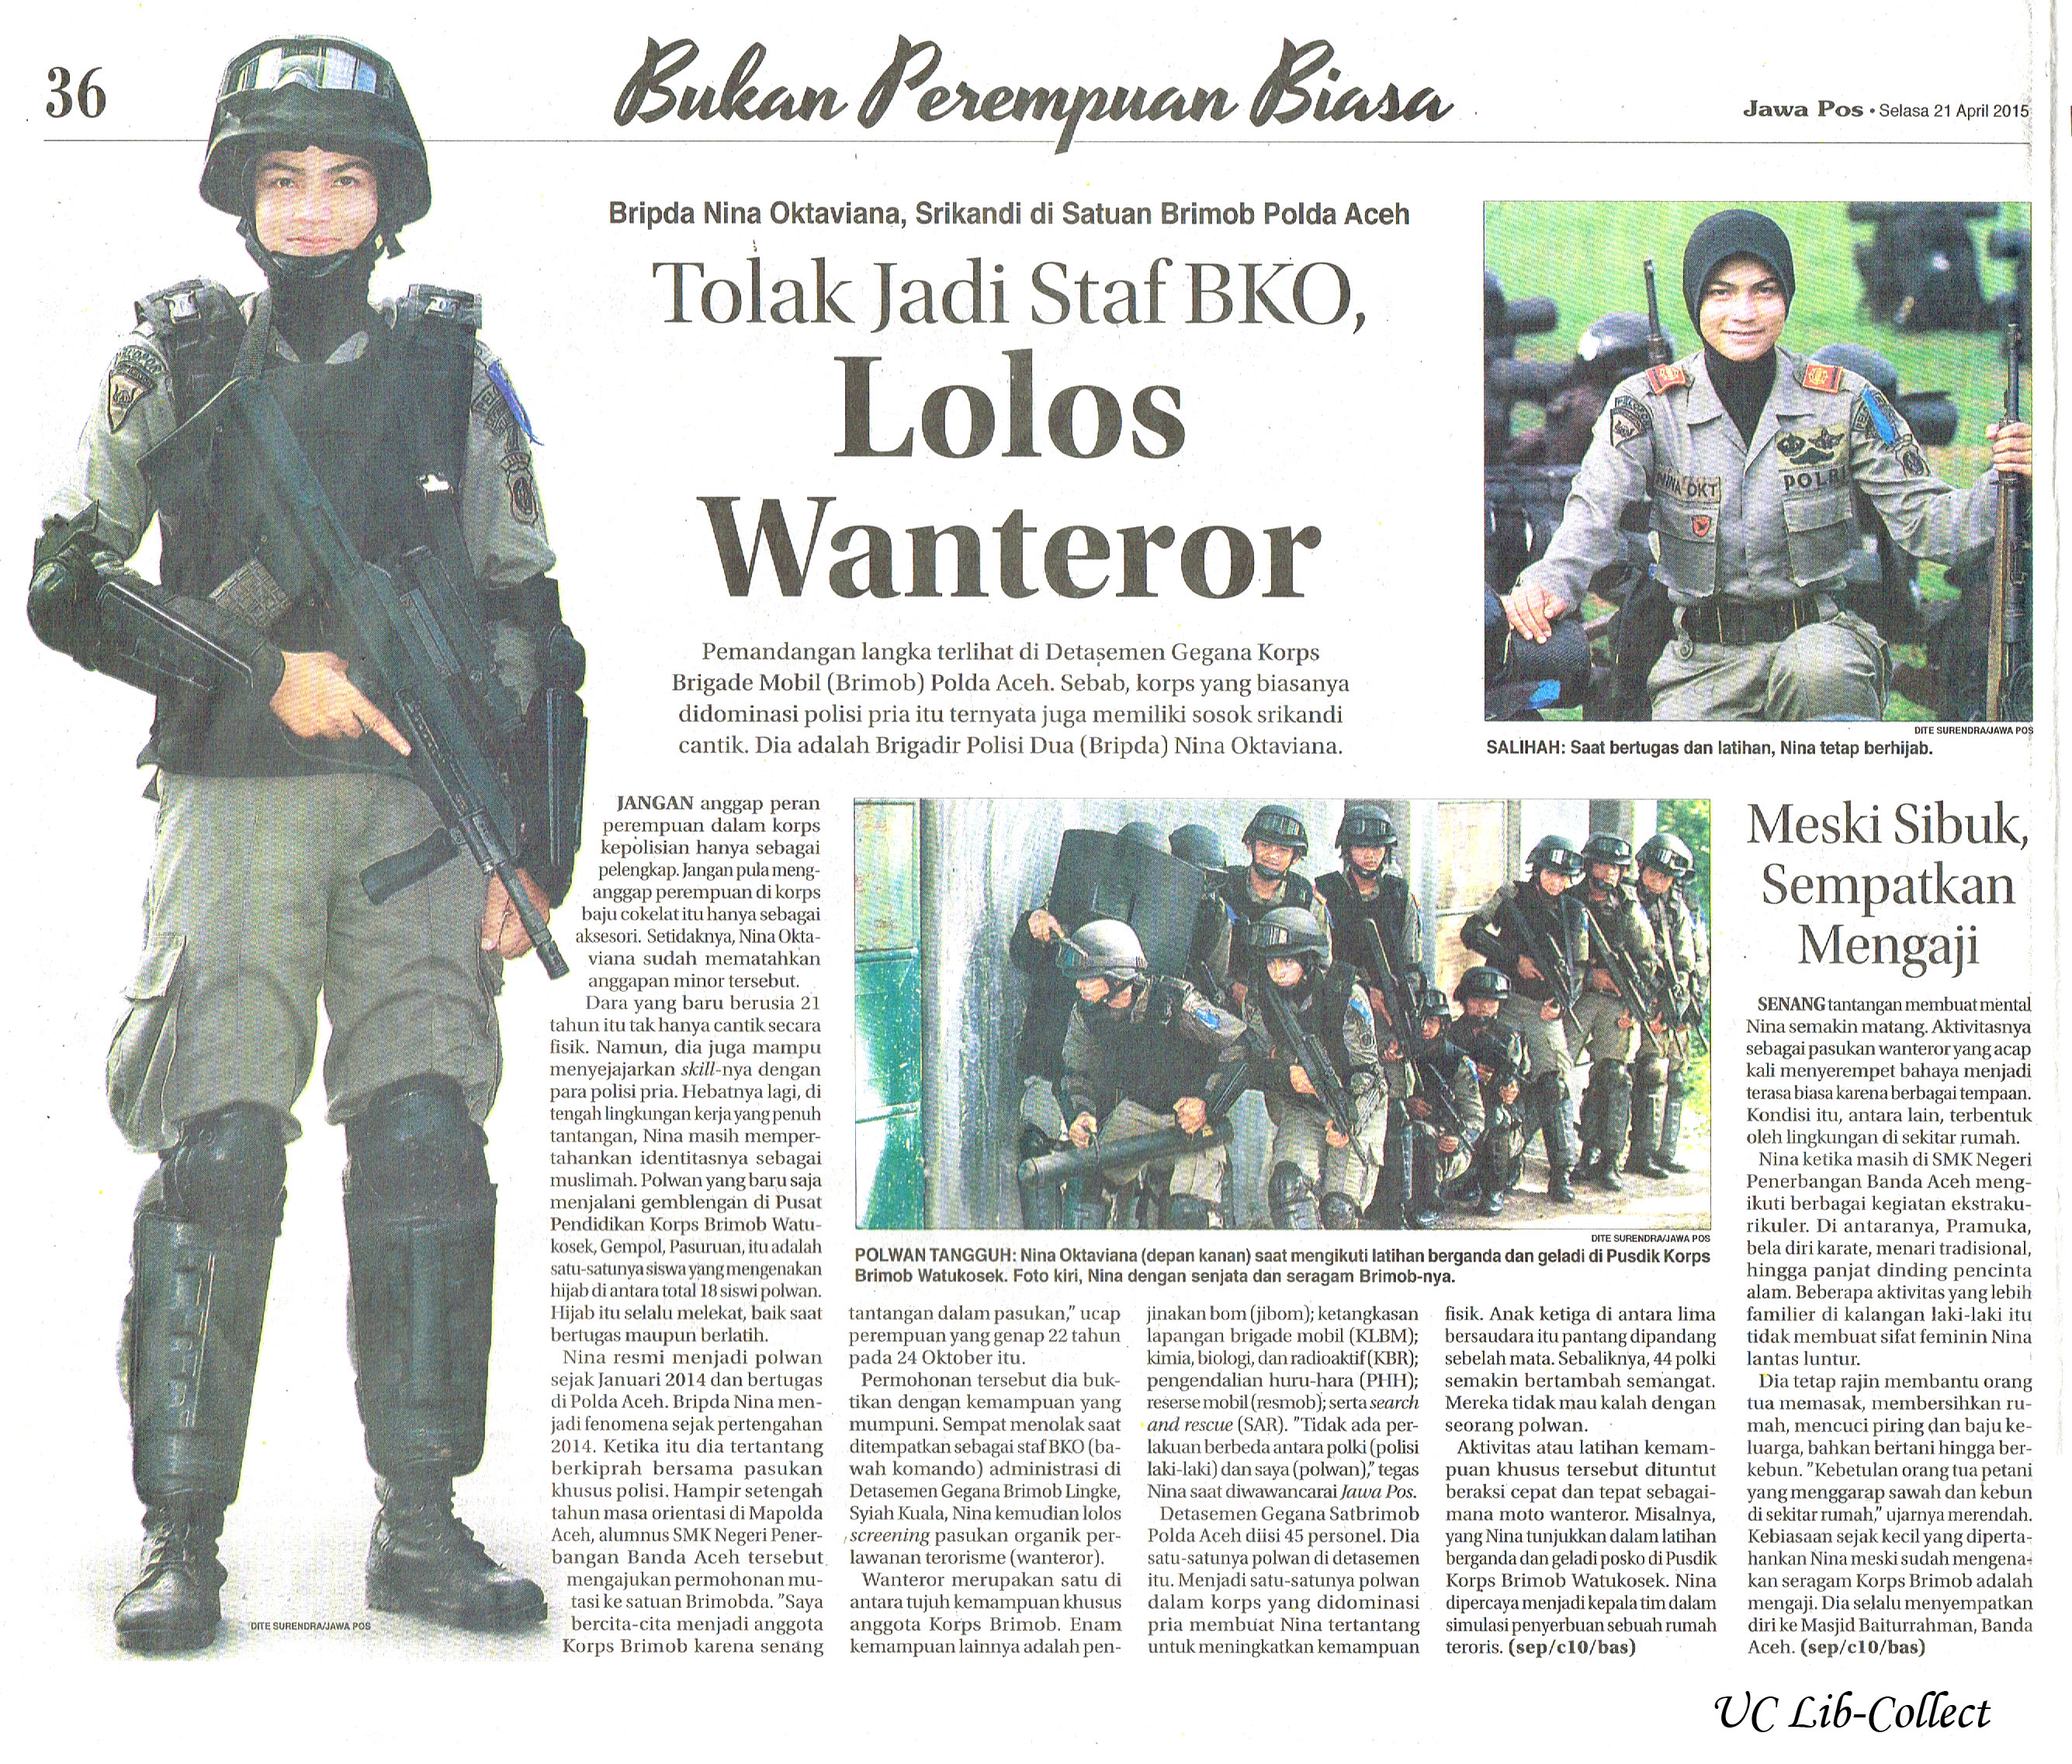 Bripda Nina Oktaviana Srikandi di Satuan Brimob Polda Aceh Jawa Pos 21 April